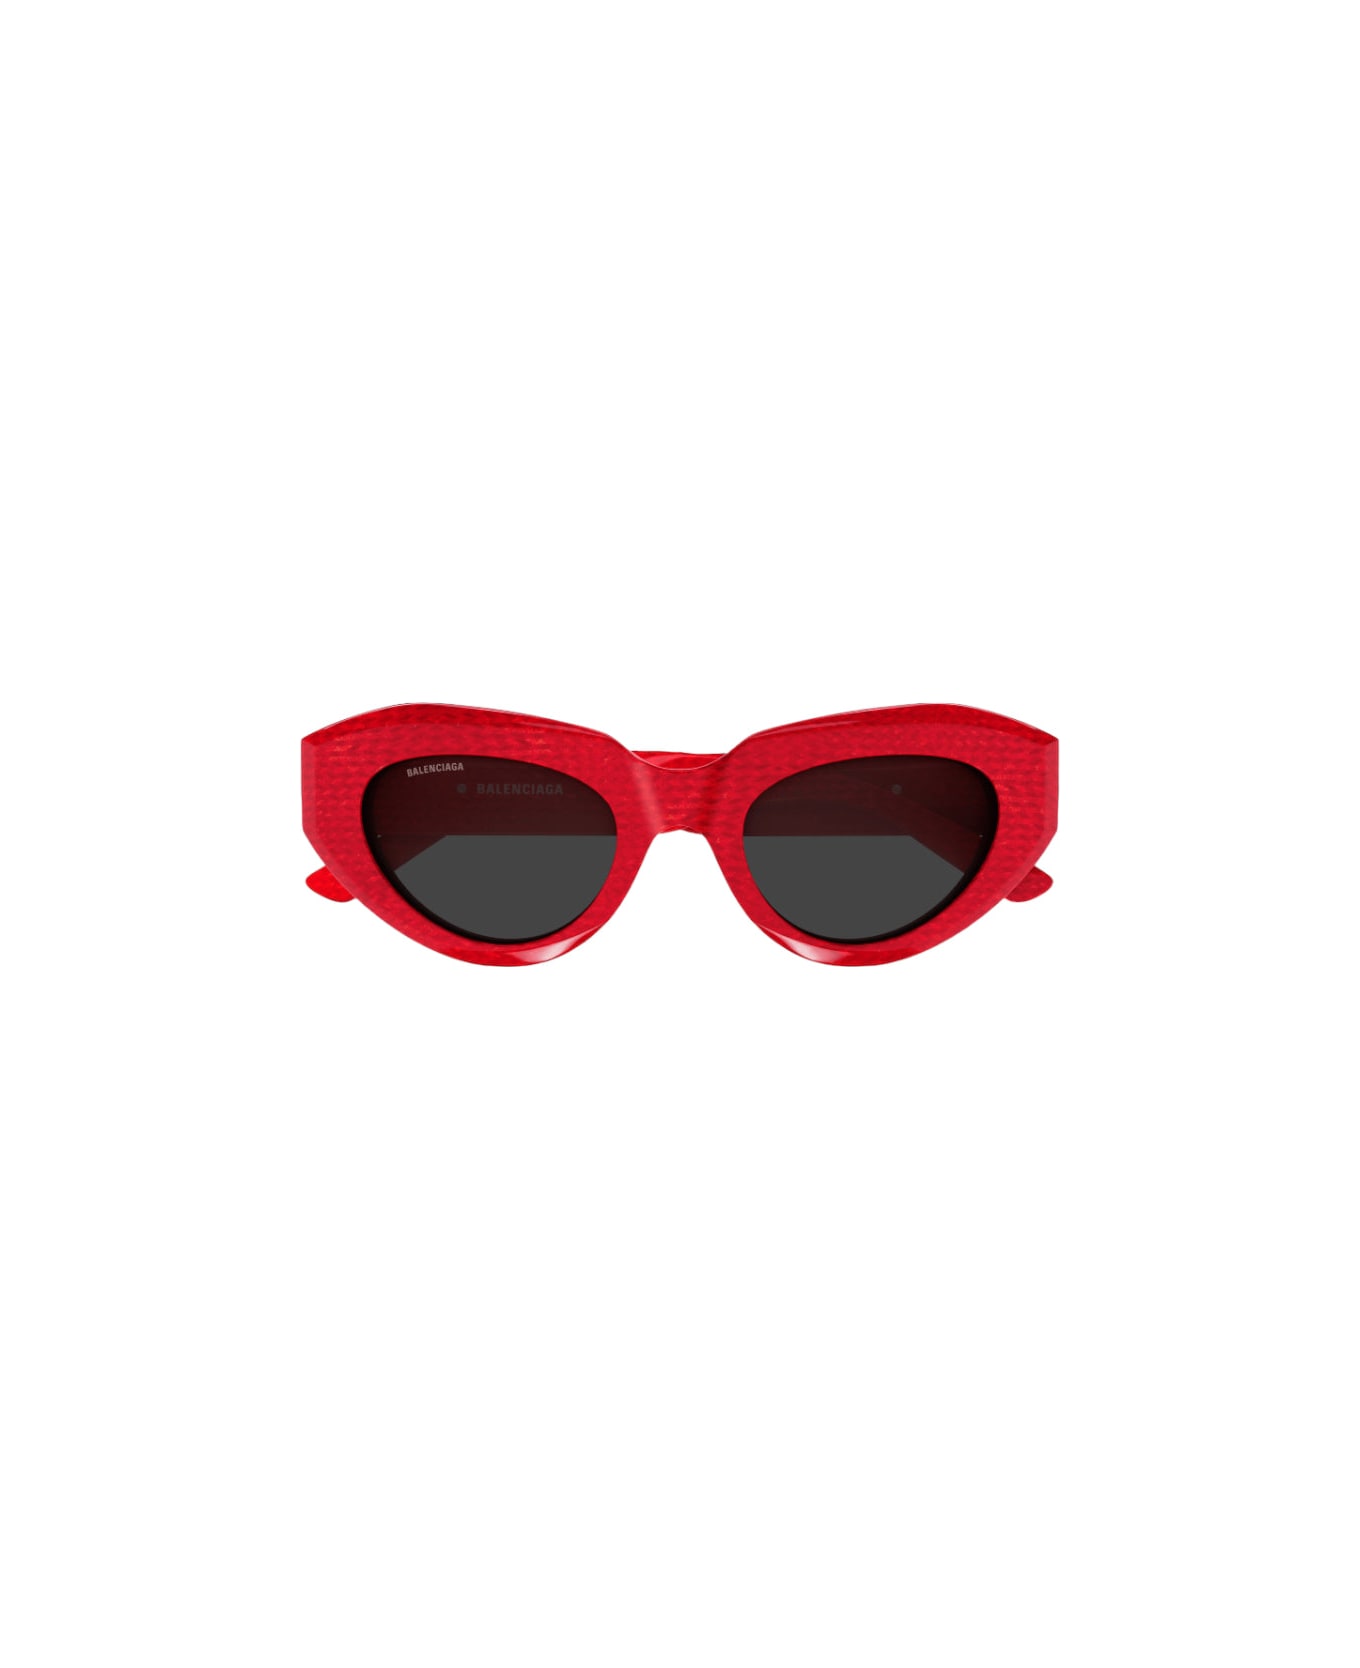 Balenciaga Eyewear Bb0236 - Red Sunglasses